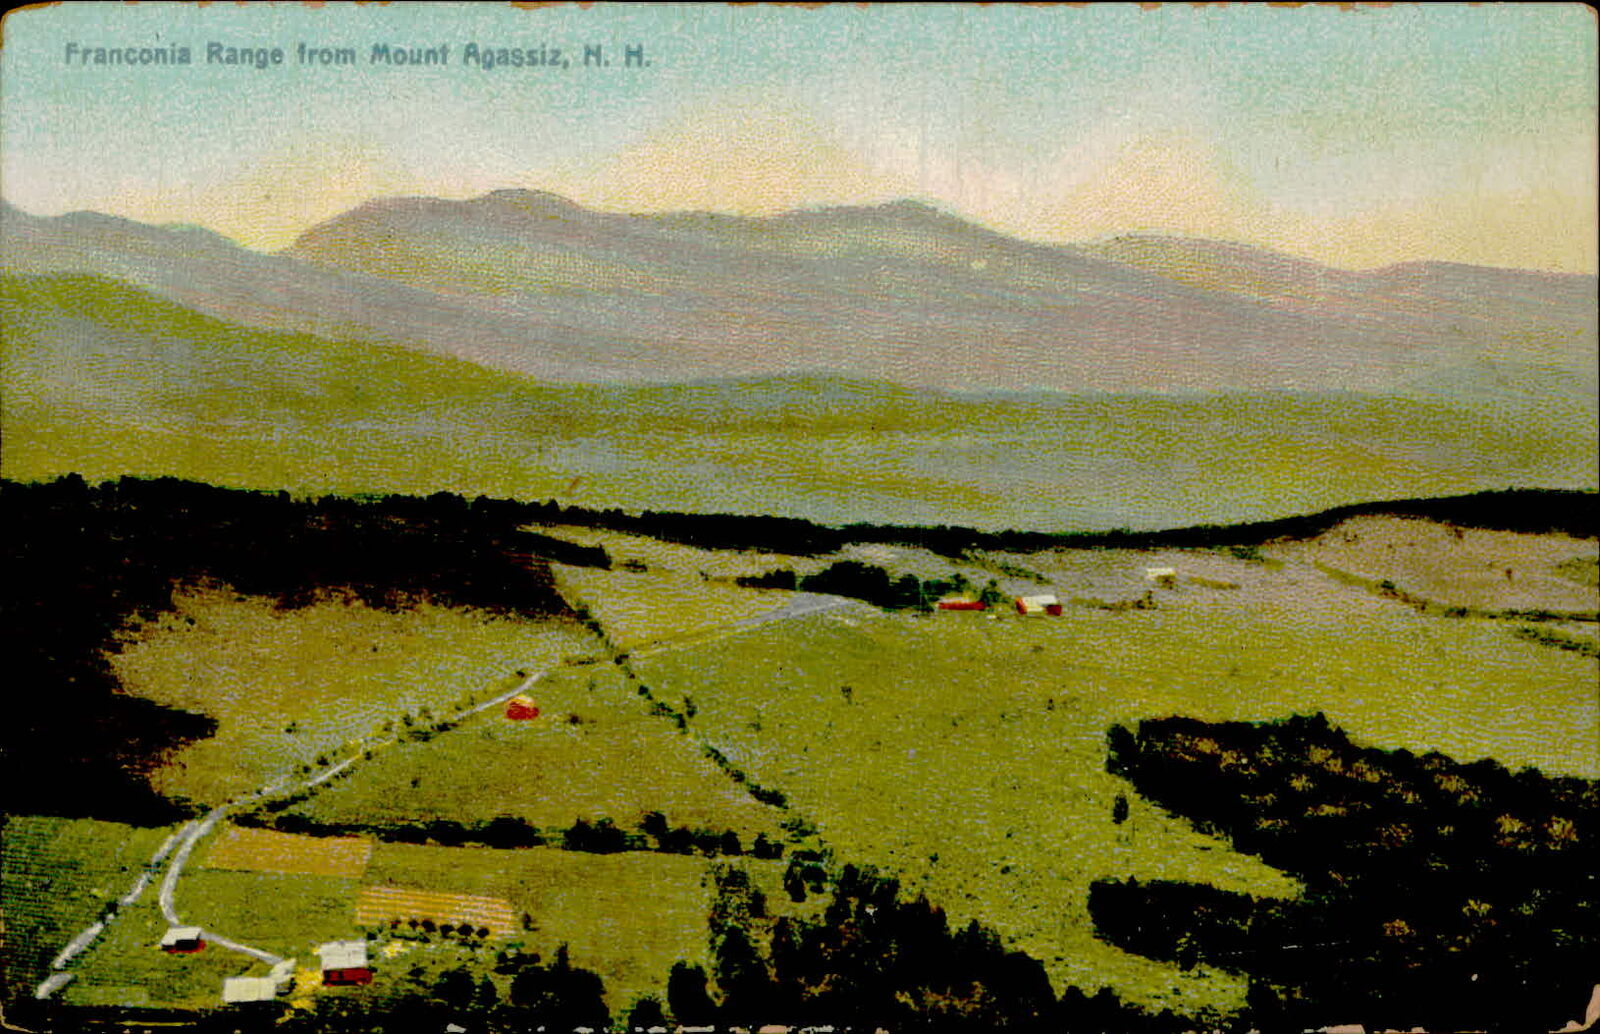 Postcard: Franconia Range from Mount Agassiz, H. H. 20